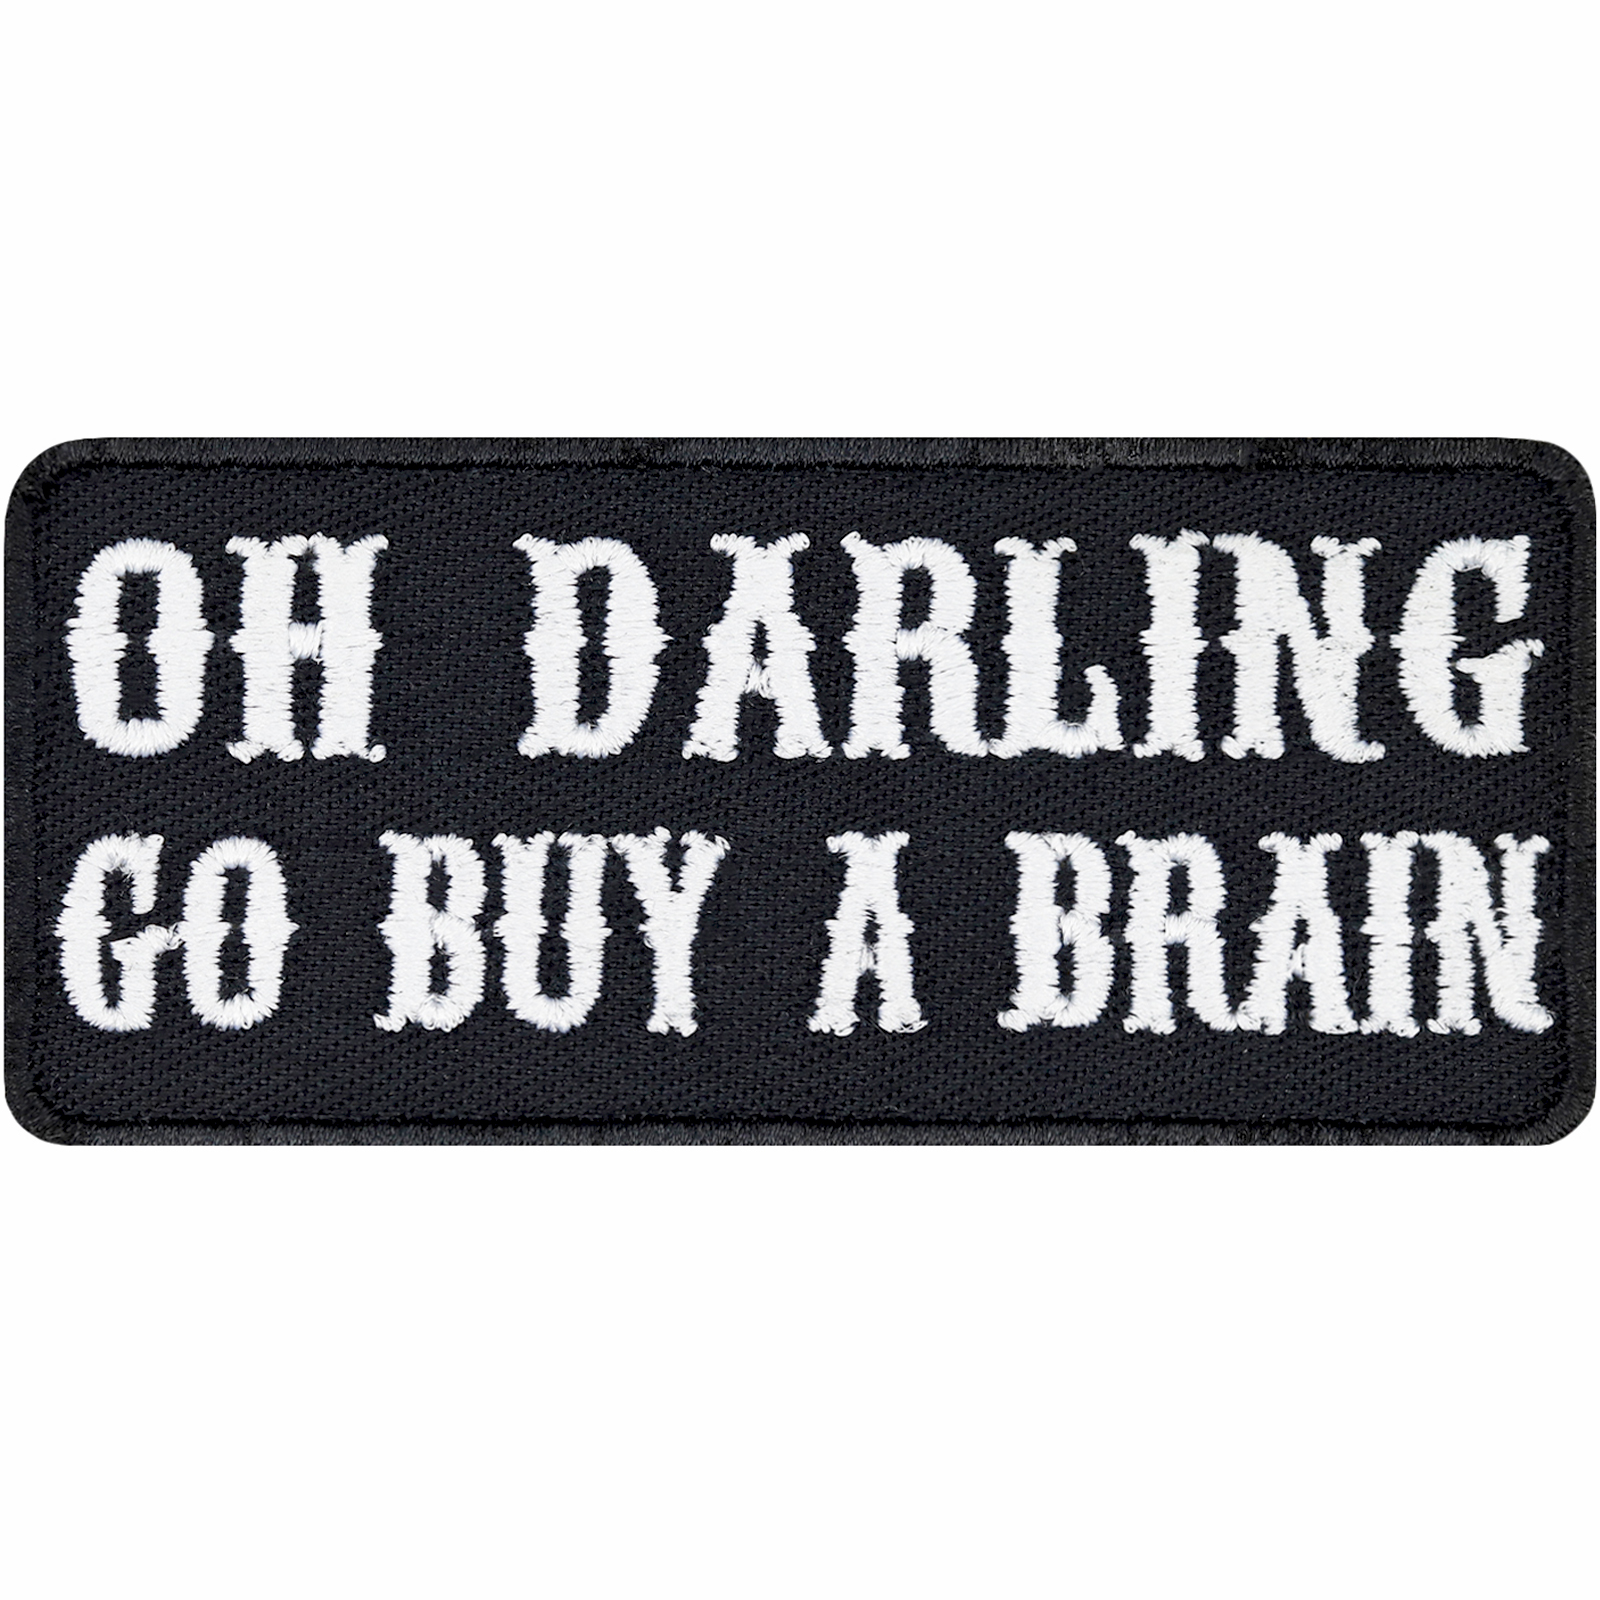 Oh darling, go buy a brain. - Patch